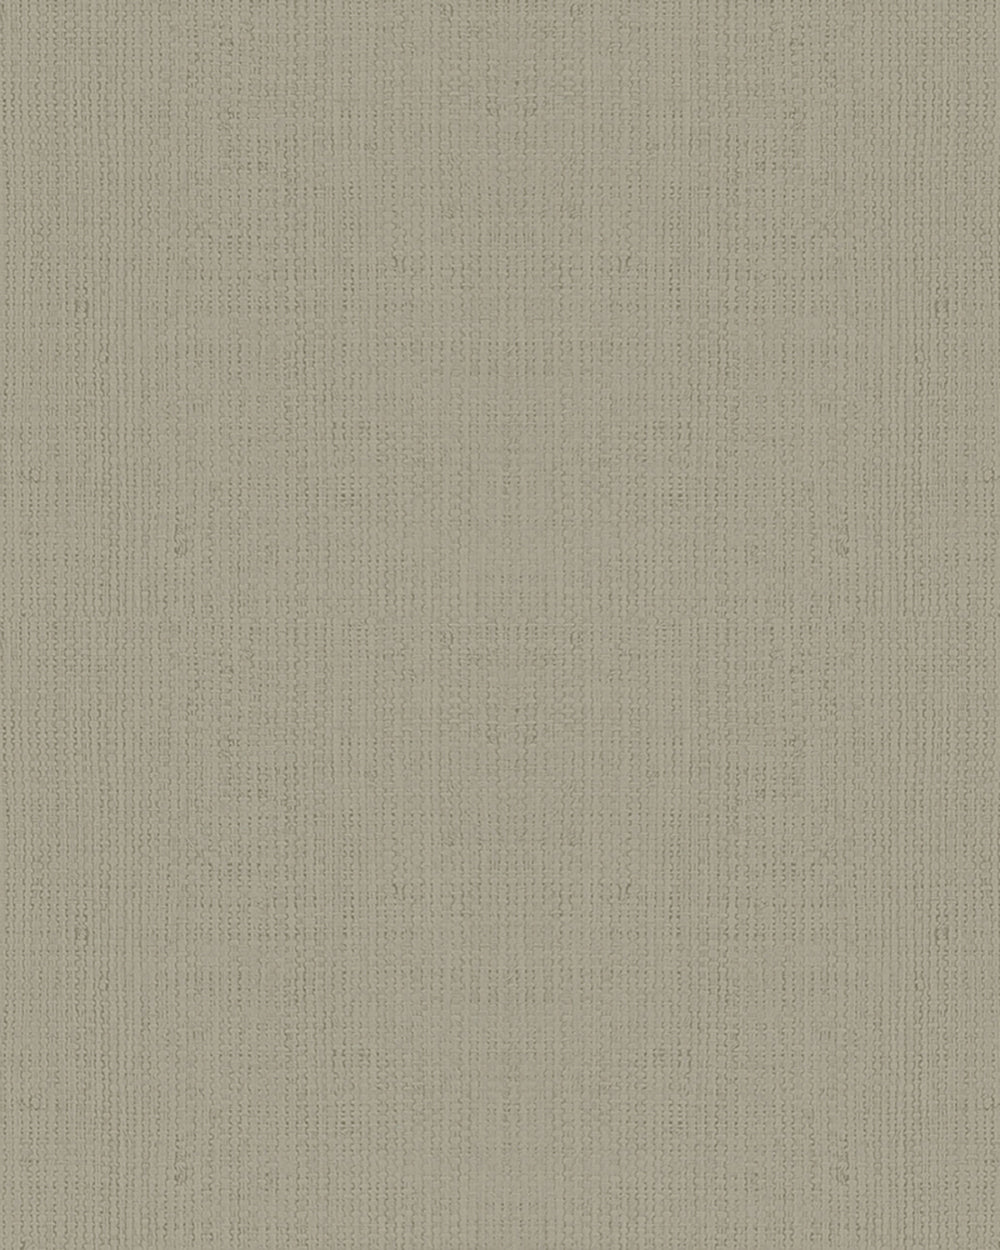 Casual - Textured Rattan Plains plain wallpaper Marburg Roll Dark Taupe  30462